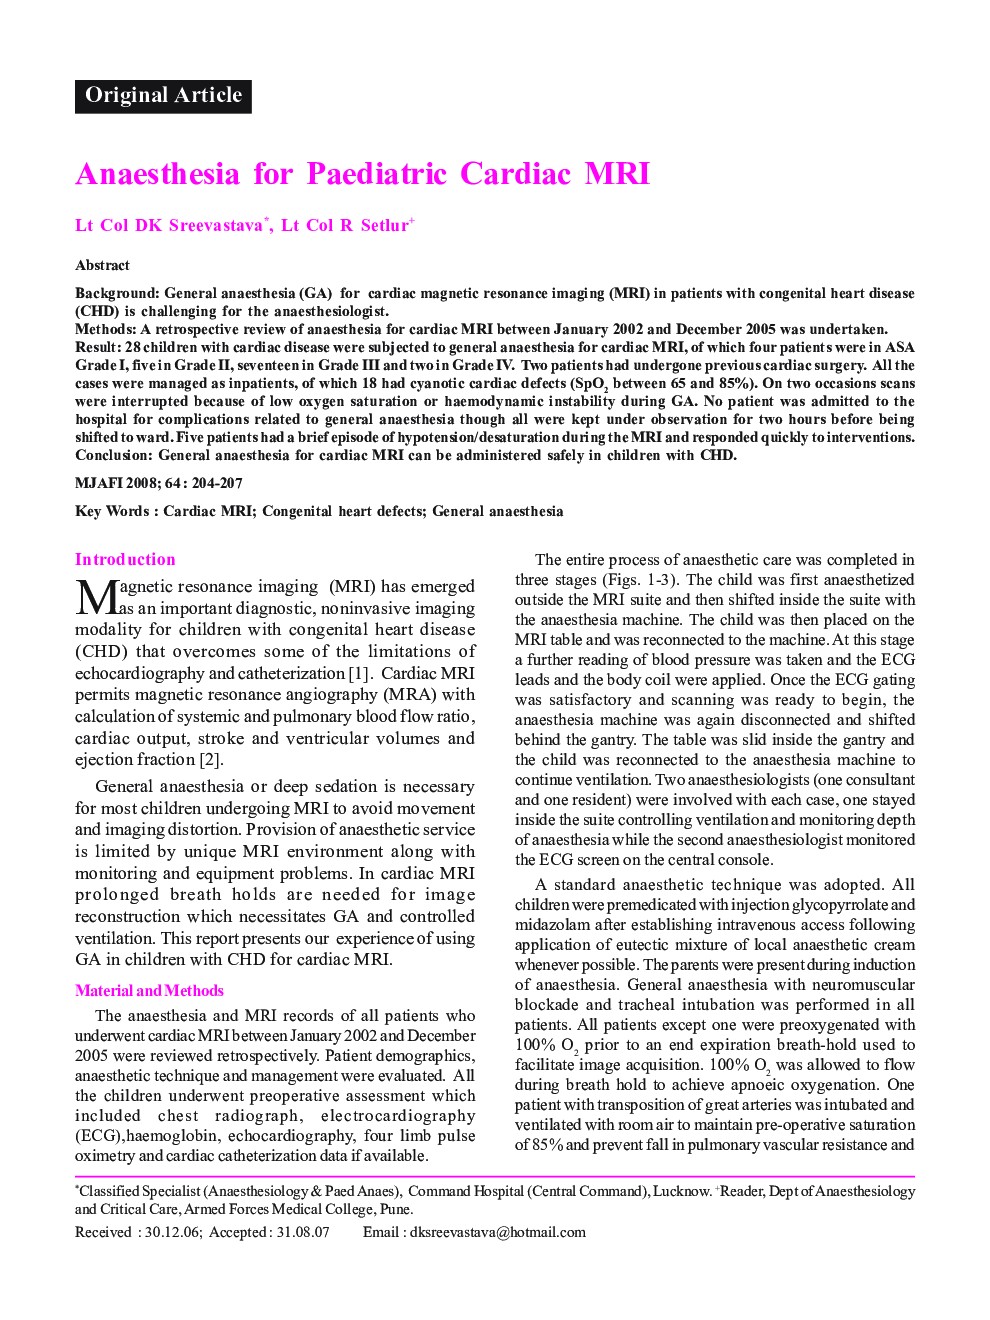 Anaesthesia for Paediatric Cardiac MRI